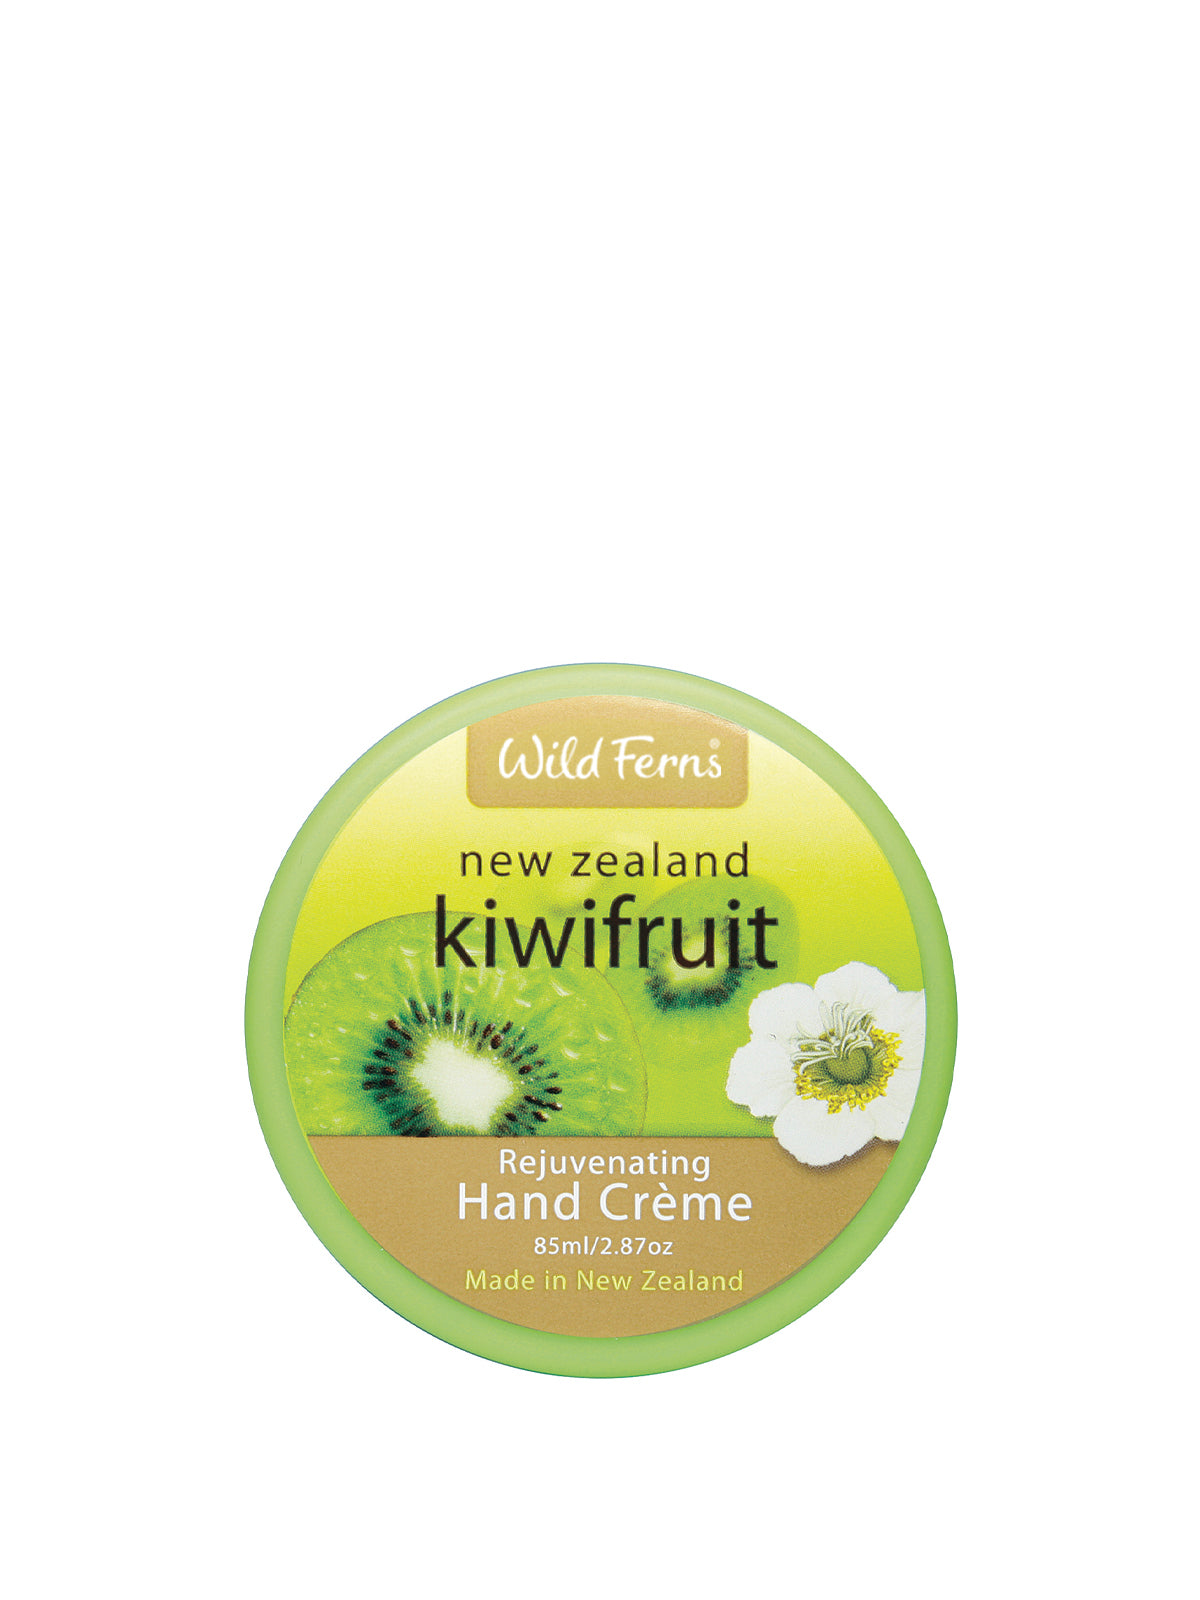 Wild Ferns Kiwifruit Rejuvenating Hand Crème, 85ml - Main Image